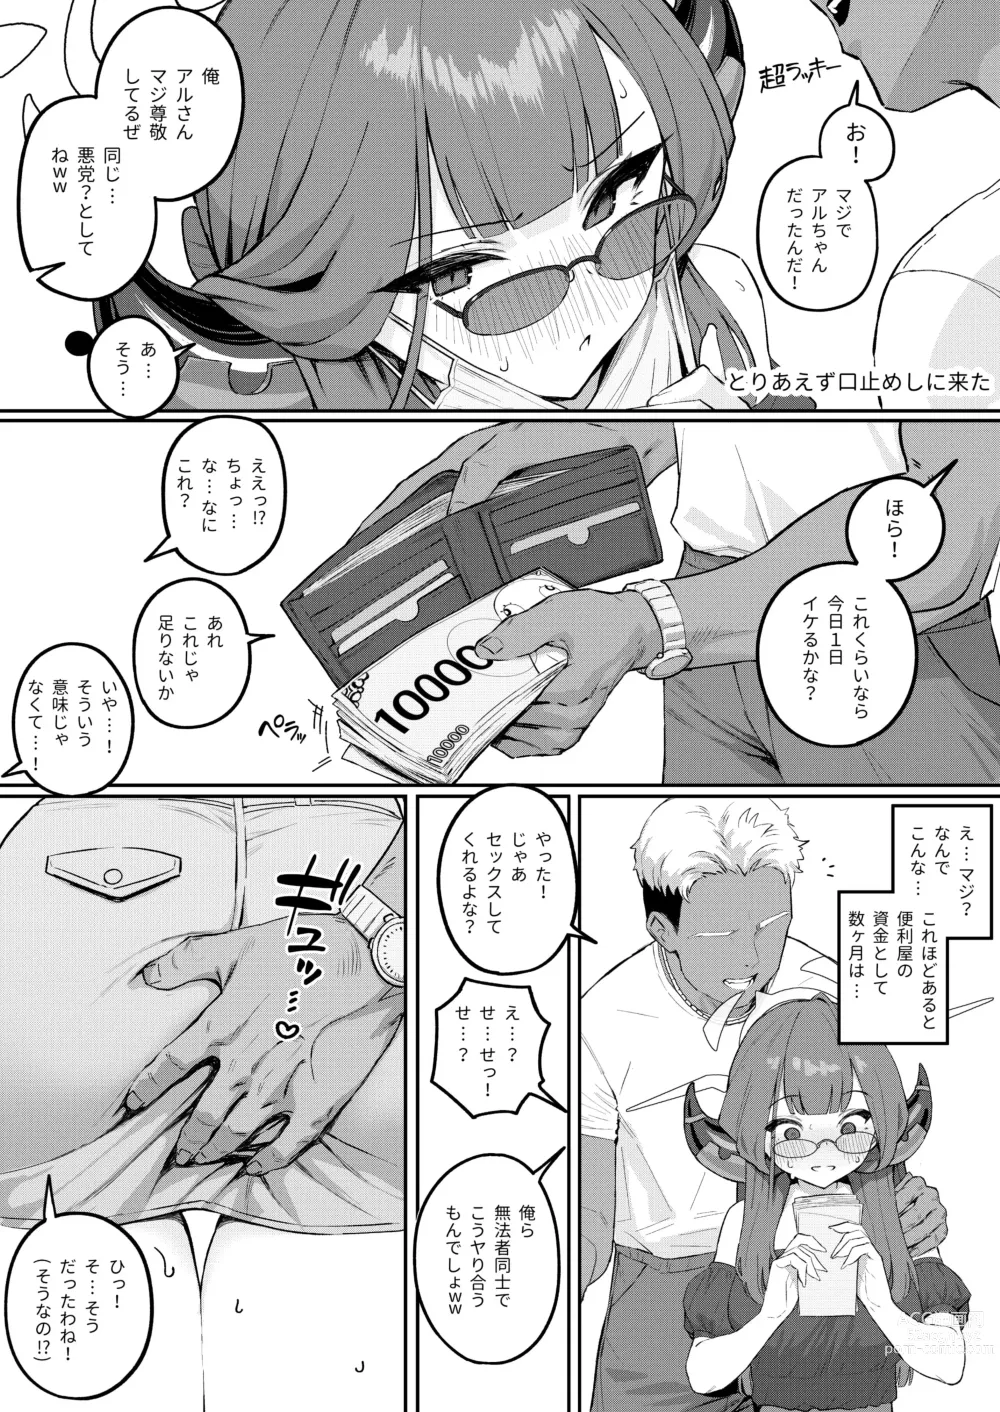 Page 6 of doujinshi ???